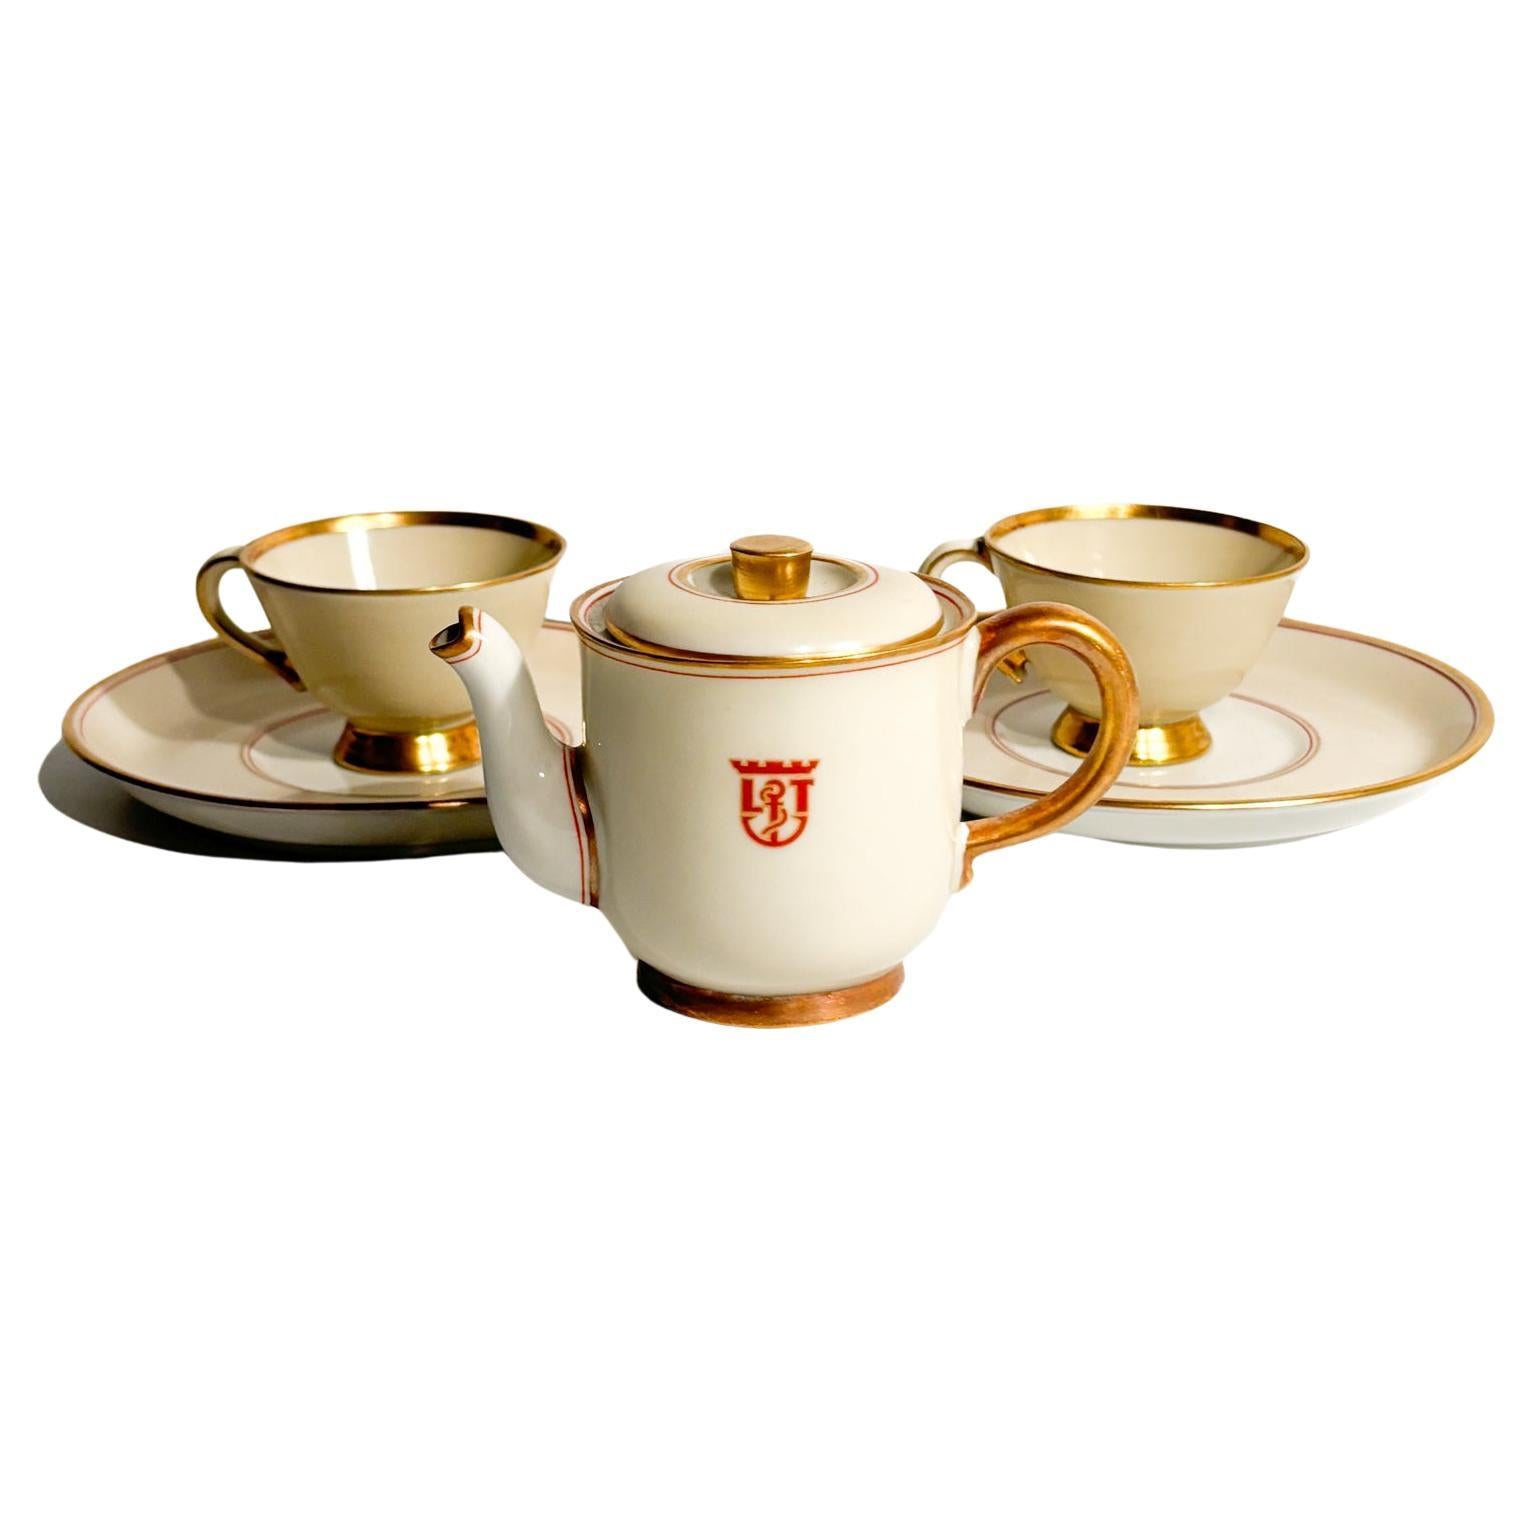 Gio Ponti Cups and Coffee Pot Designed for the Victoria Lloyd Triestino Ship  For Sale